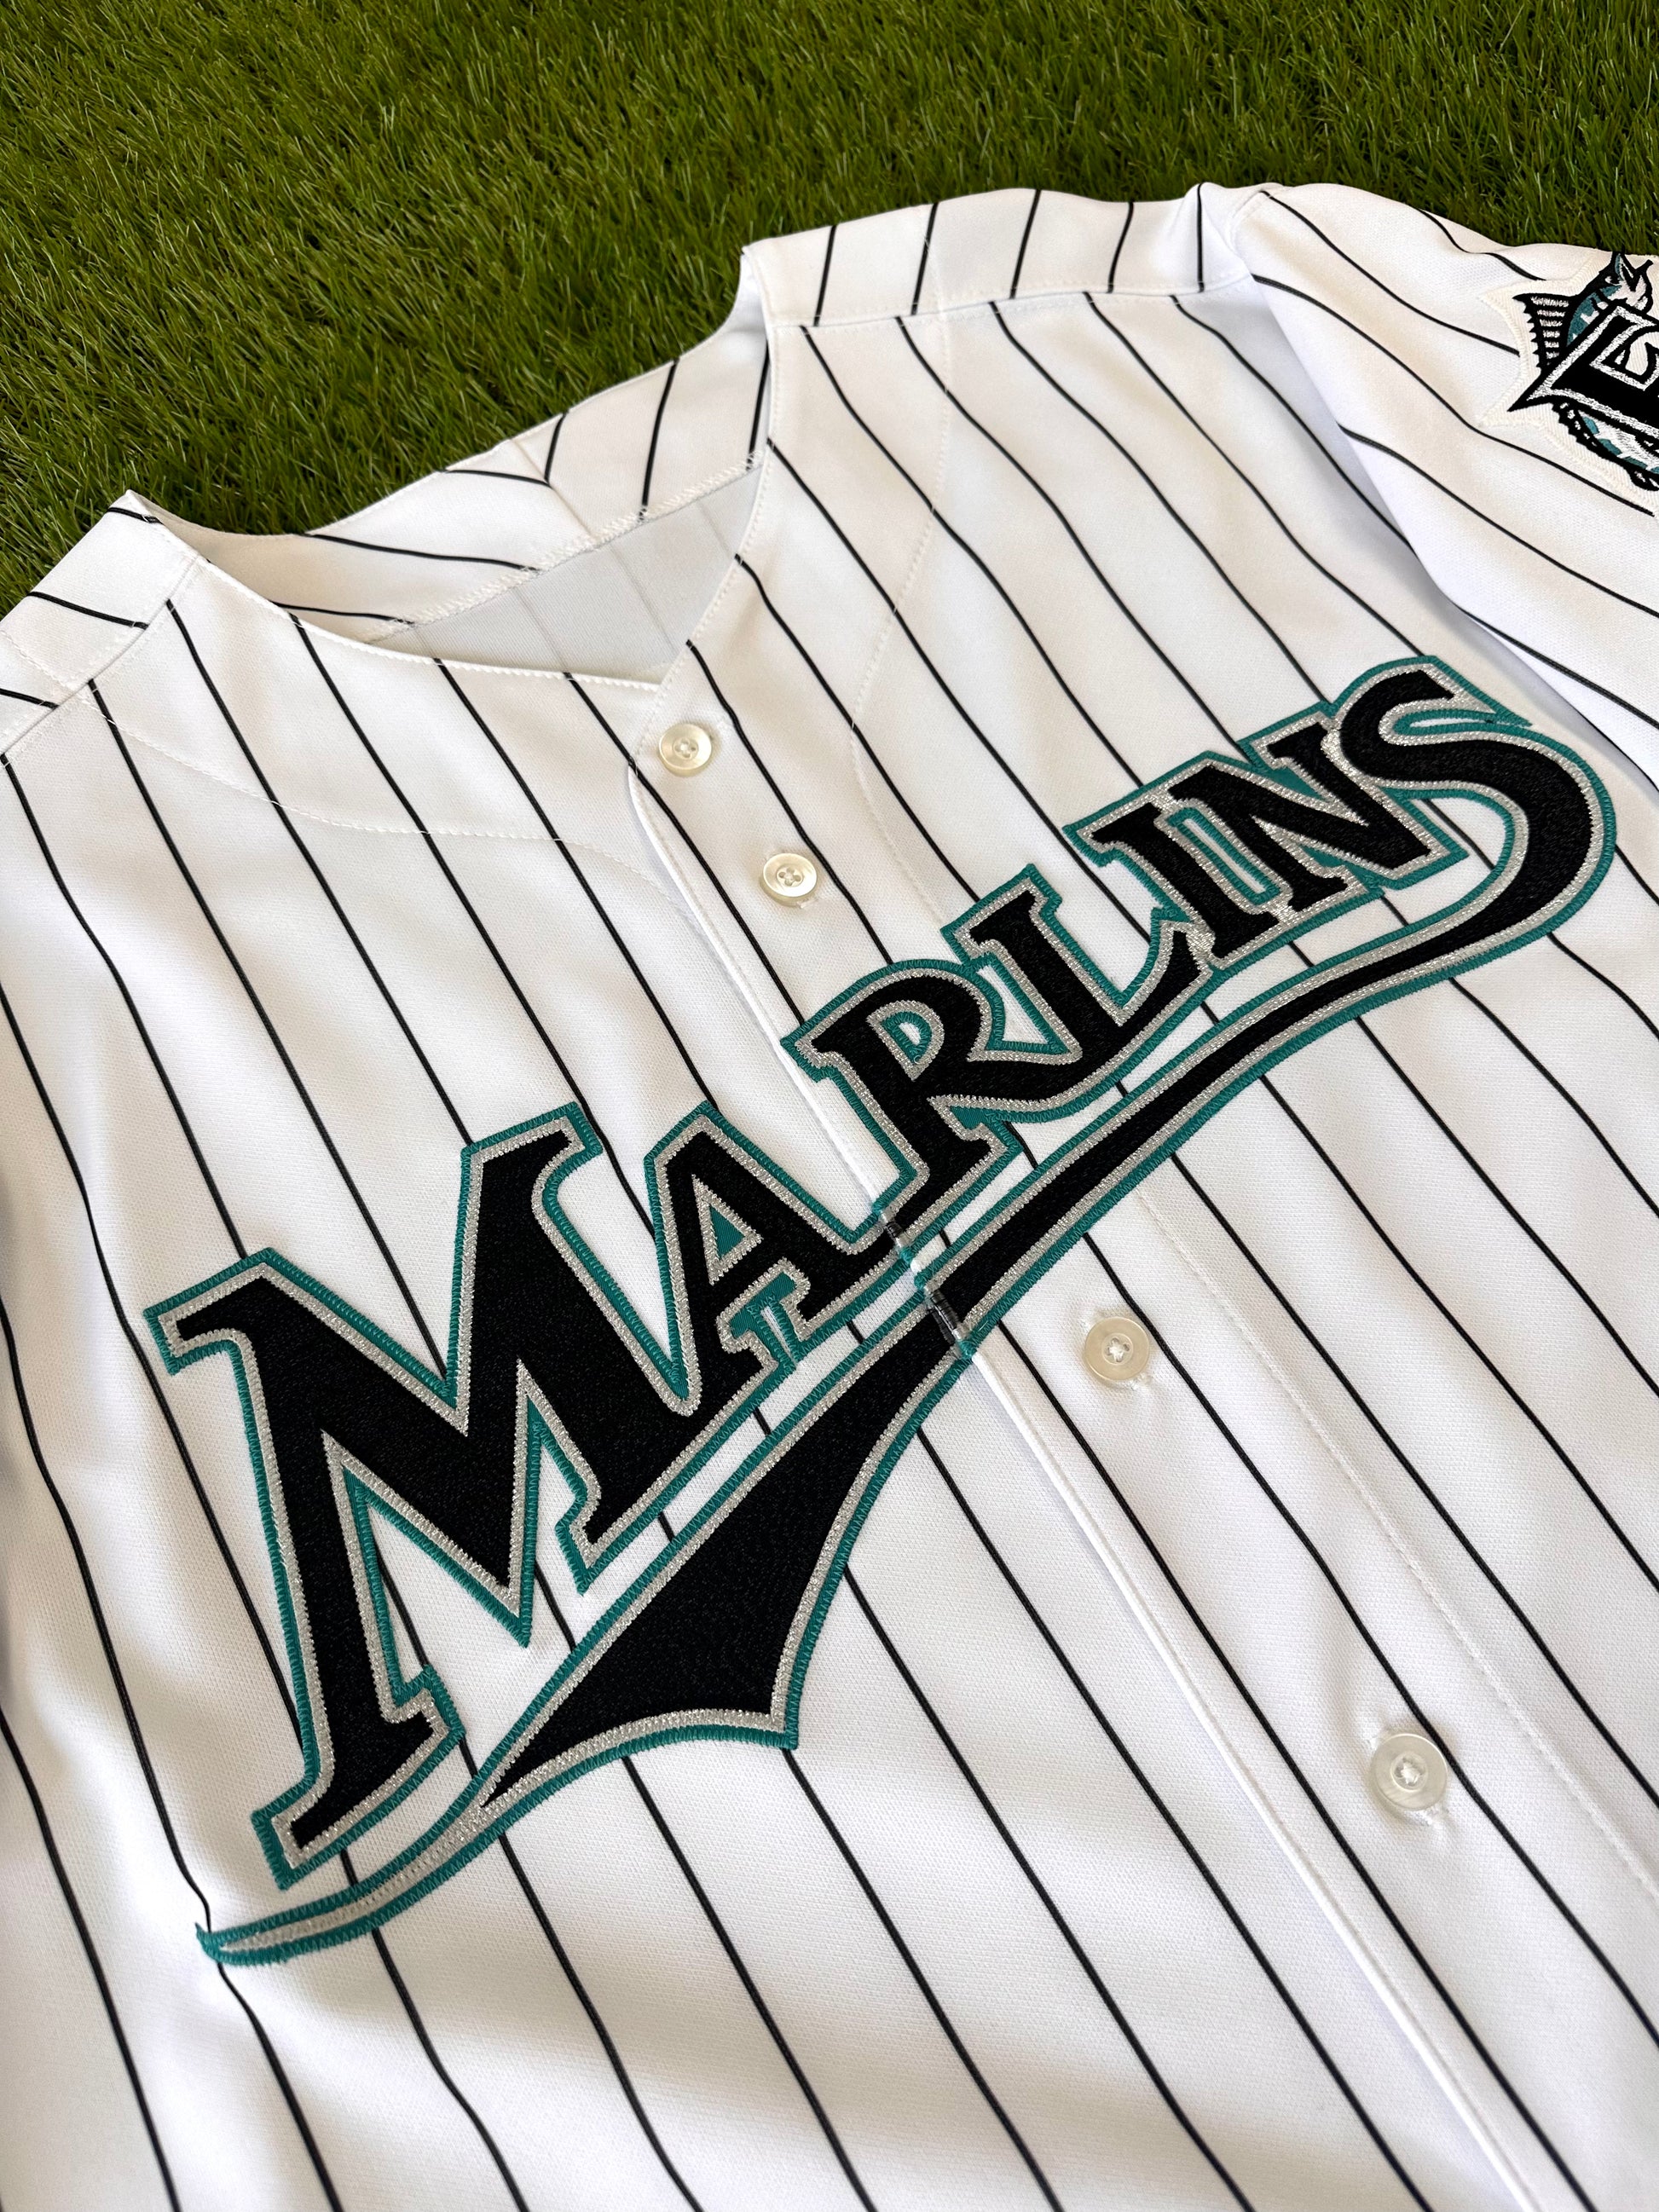 Florida Marlins 2007 Dan Uggla MLB Baseball Jersey (48/XL) – Grail